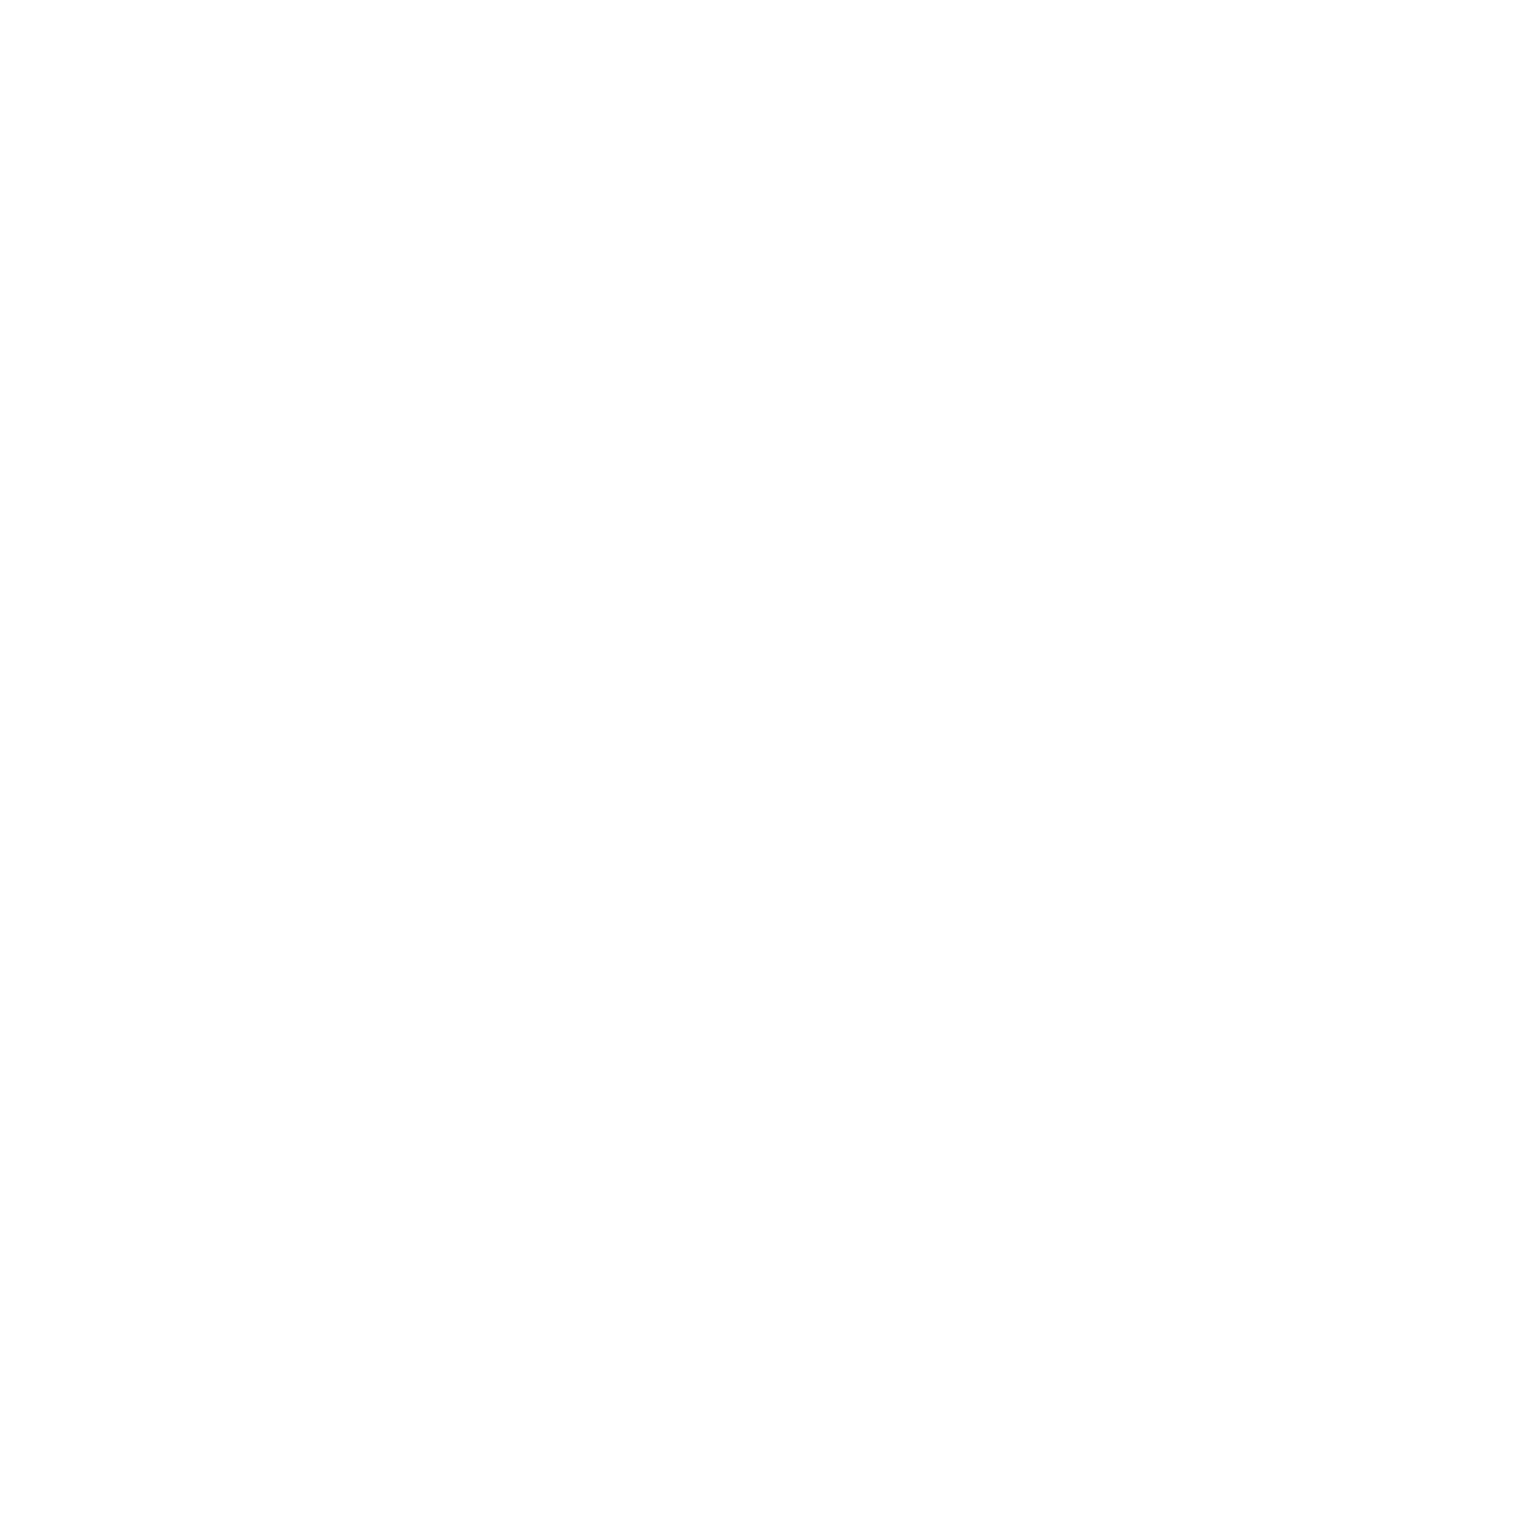 Khaleeji Bank logo for dark backgrounds (transparent PNG)